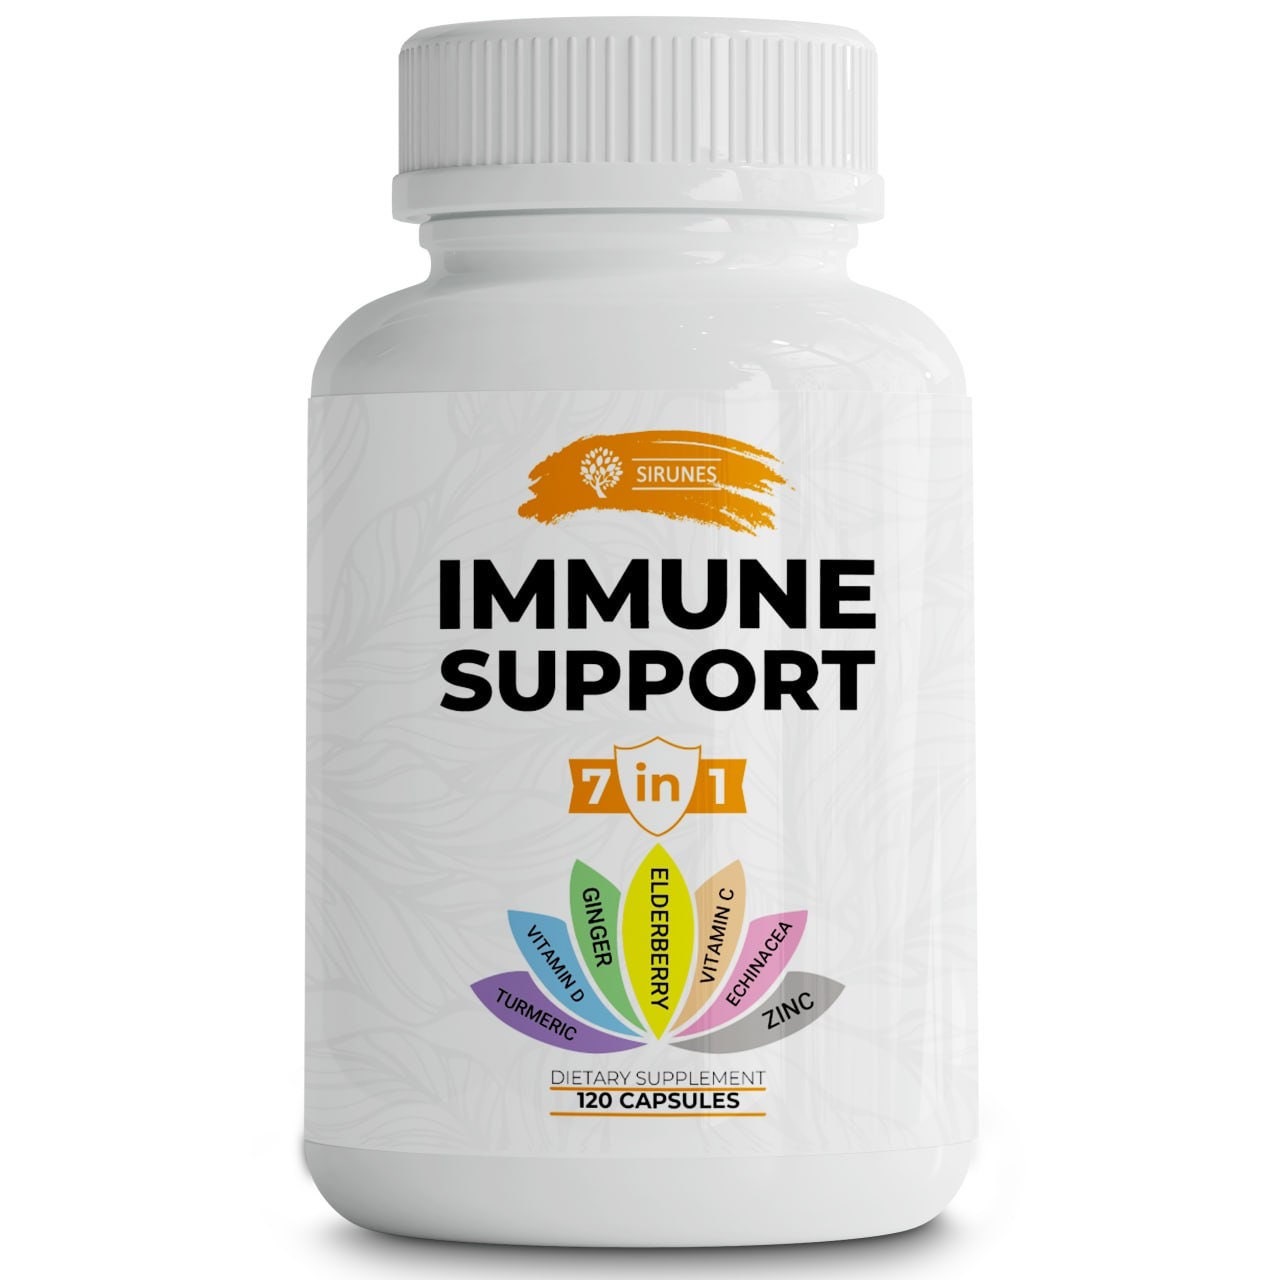 7-in-1 Immune Support Immunity Defense Multivitamin Supplement with Vitamin C and D3-Elderberry-Zinc-Echinacea-Ginger-Turmeric 120 capsules